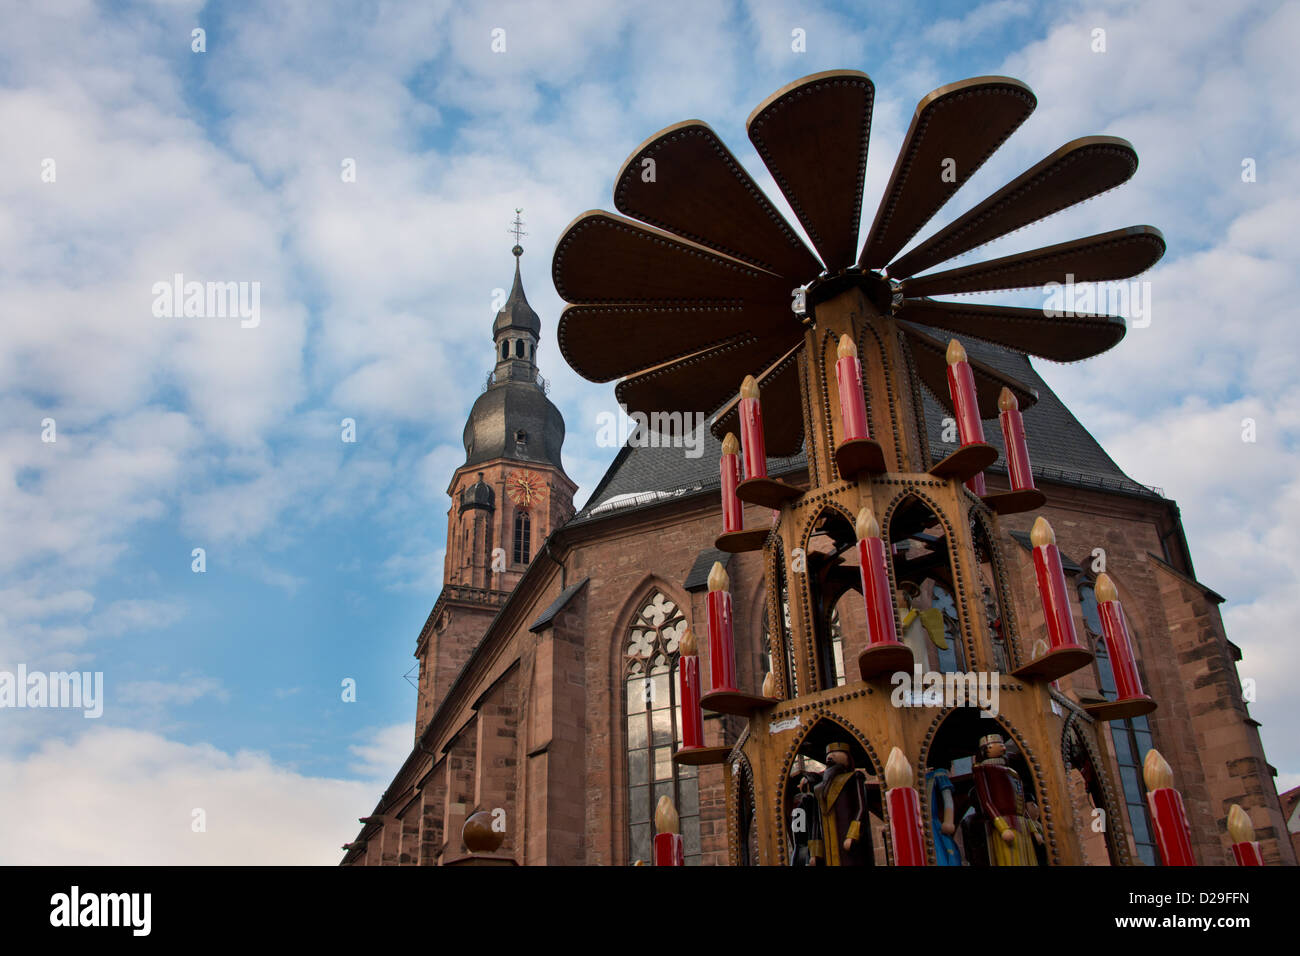 Germany, Heidelberg. Giant traditional Christmas pyramid (aka Weihnachtspyramiden). Stock Photo